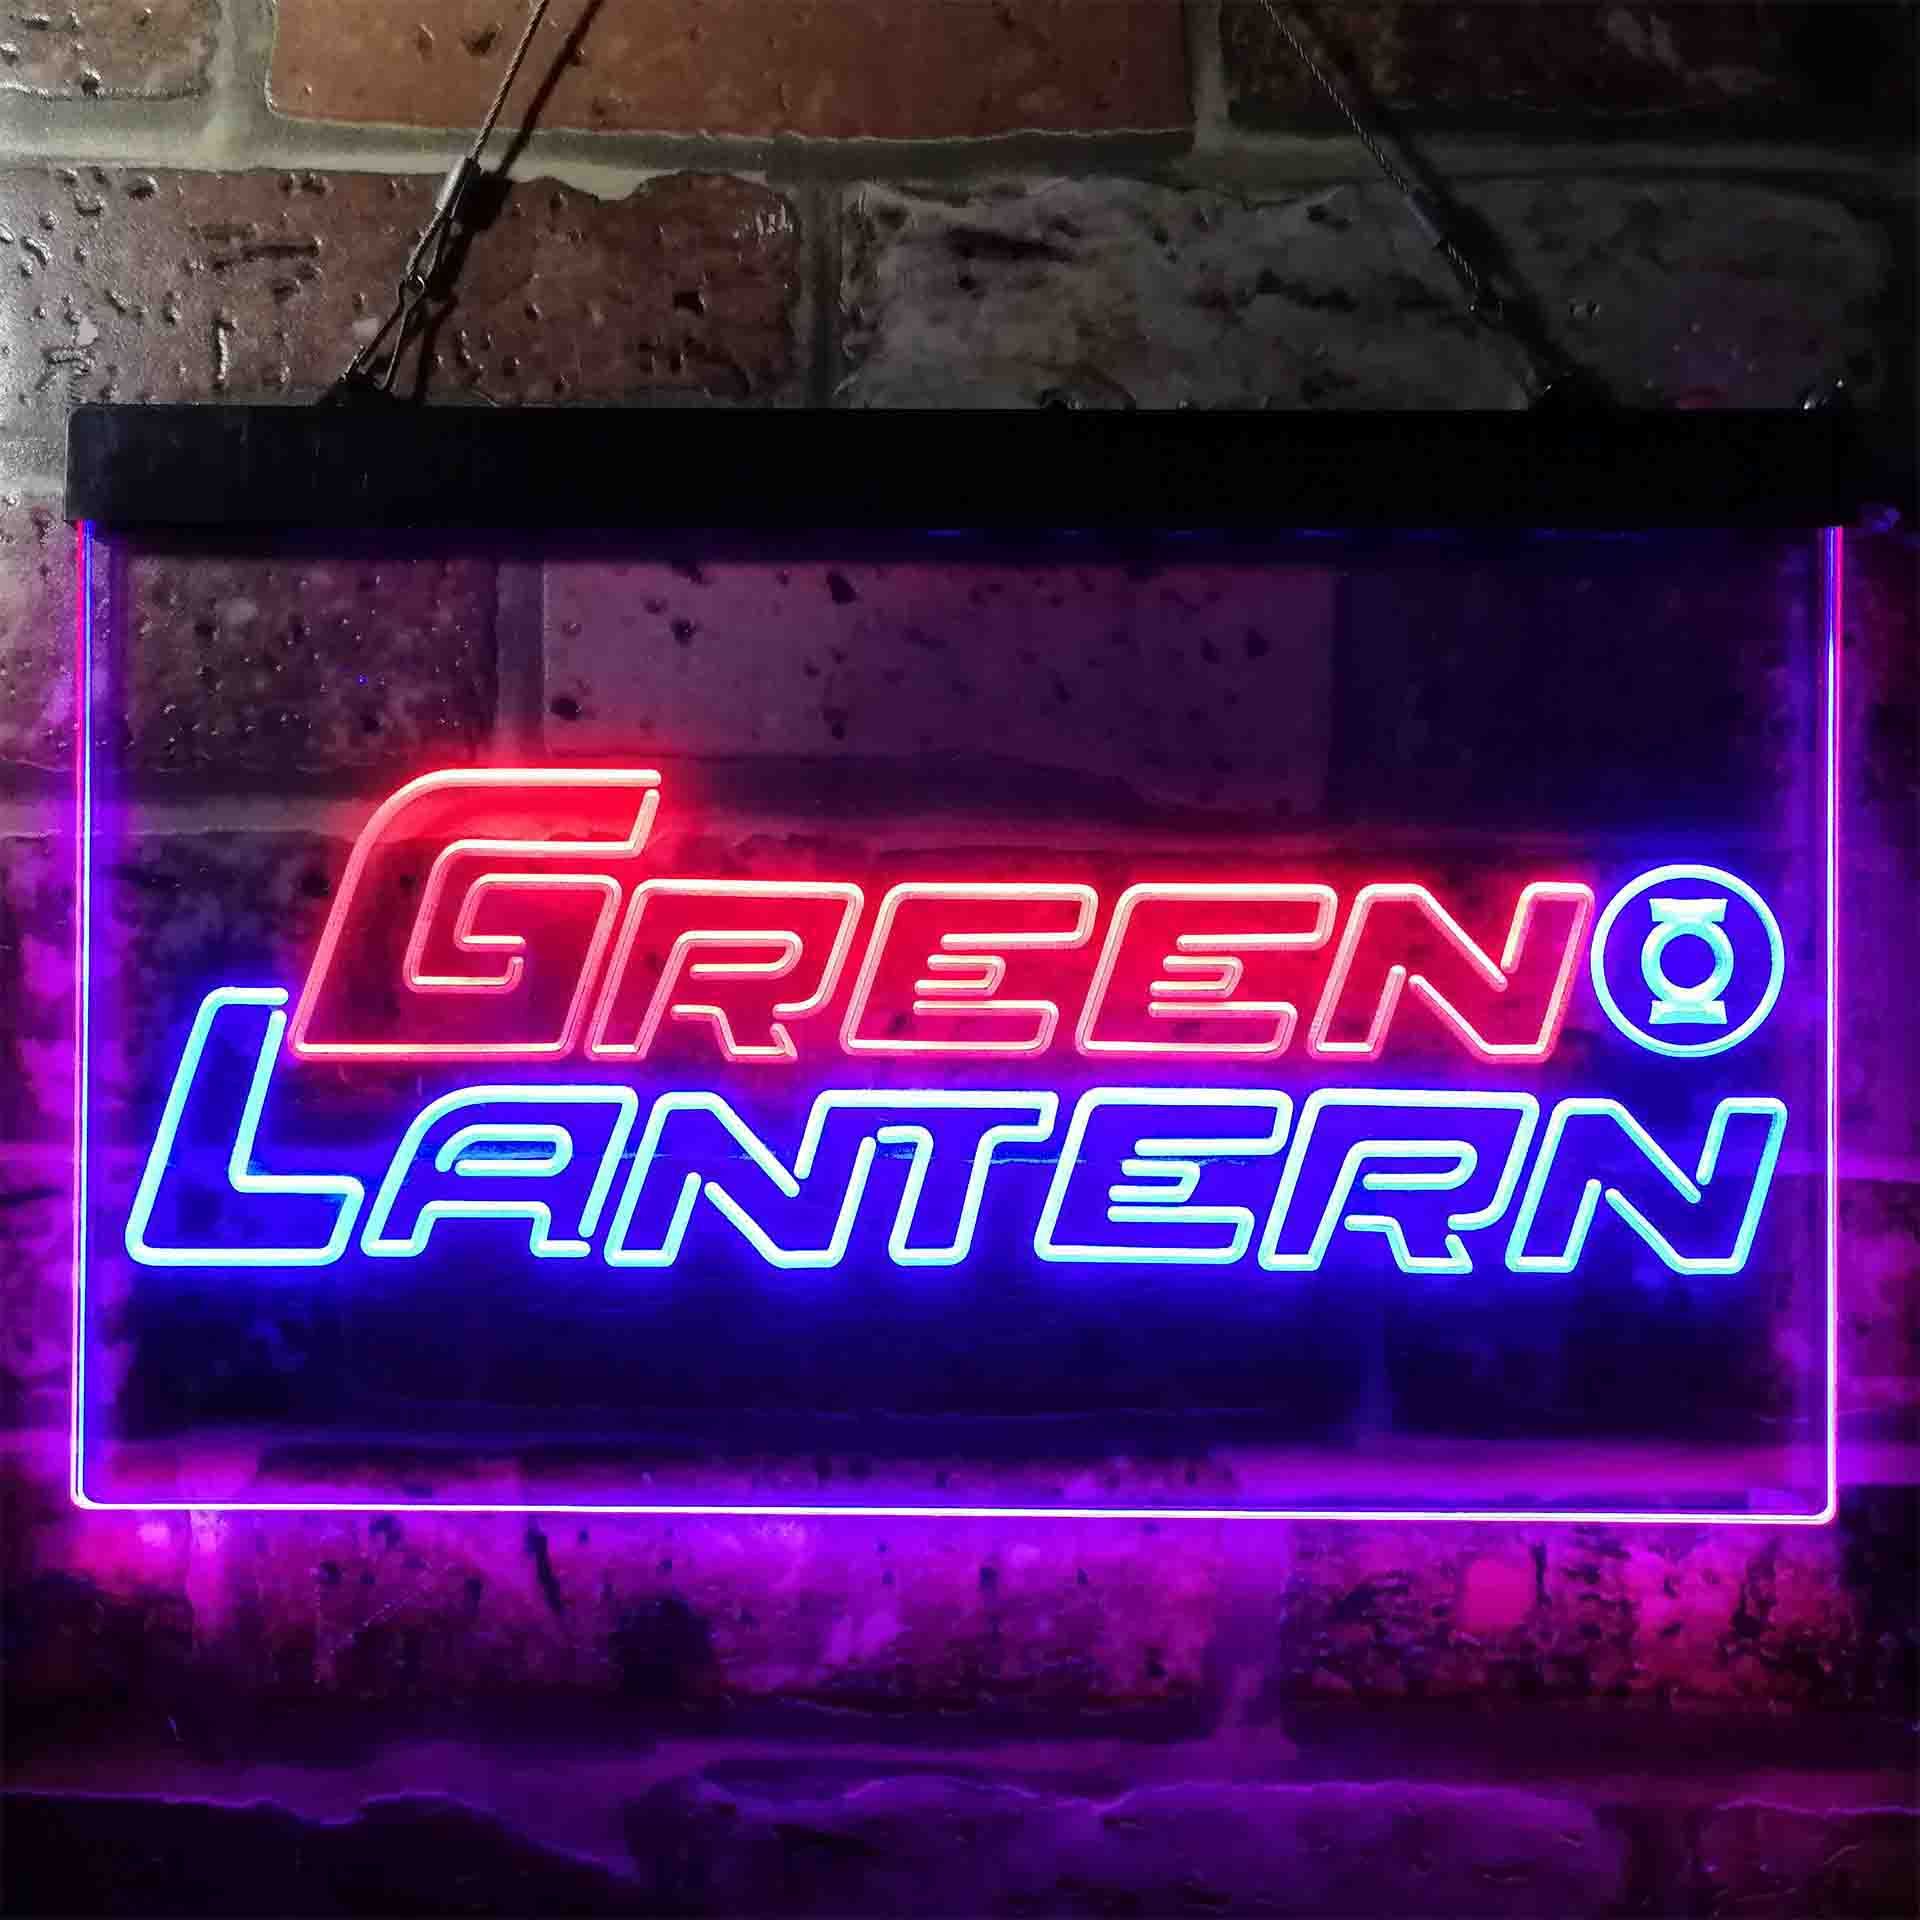 Green Lantern Dual LED Neon Light Sign